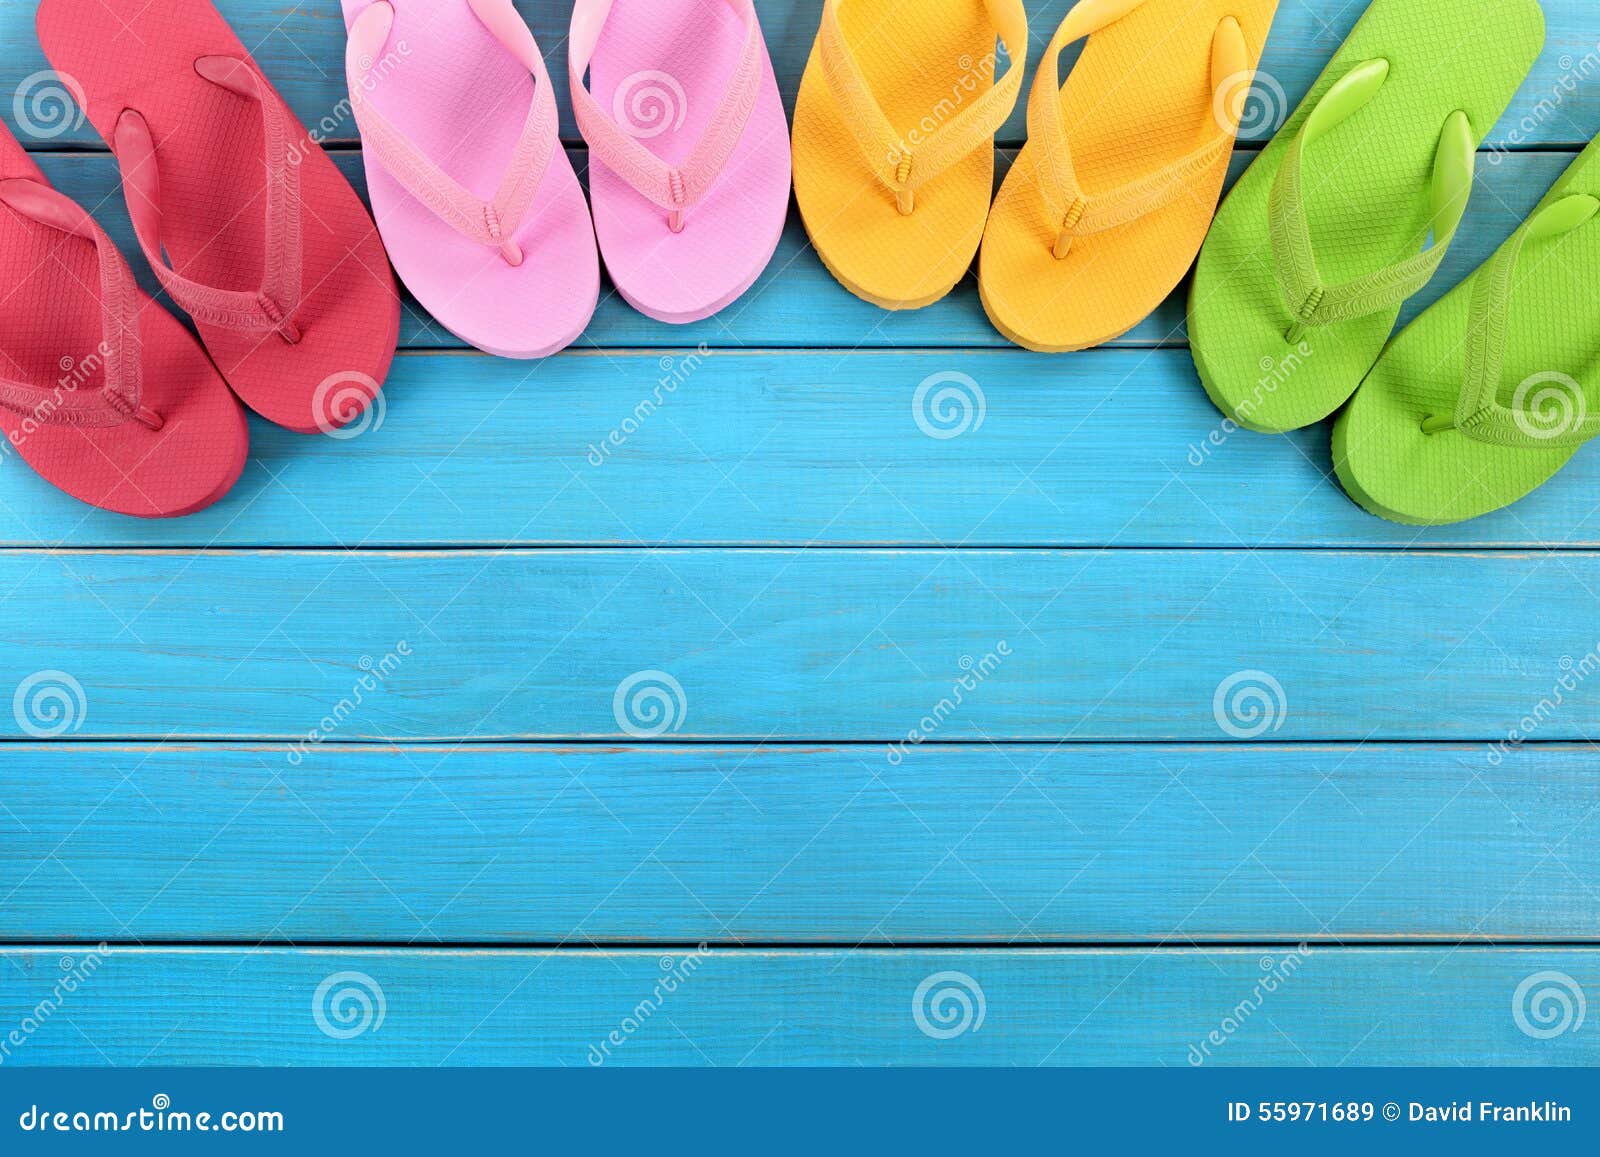 Flip Flops, Summer Beach Border, Copy Space Stock Image - Image of ...